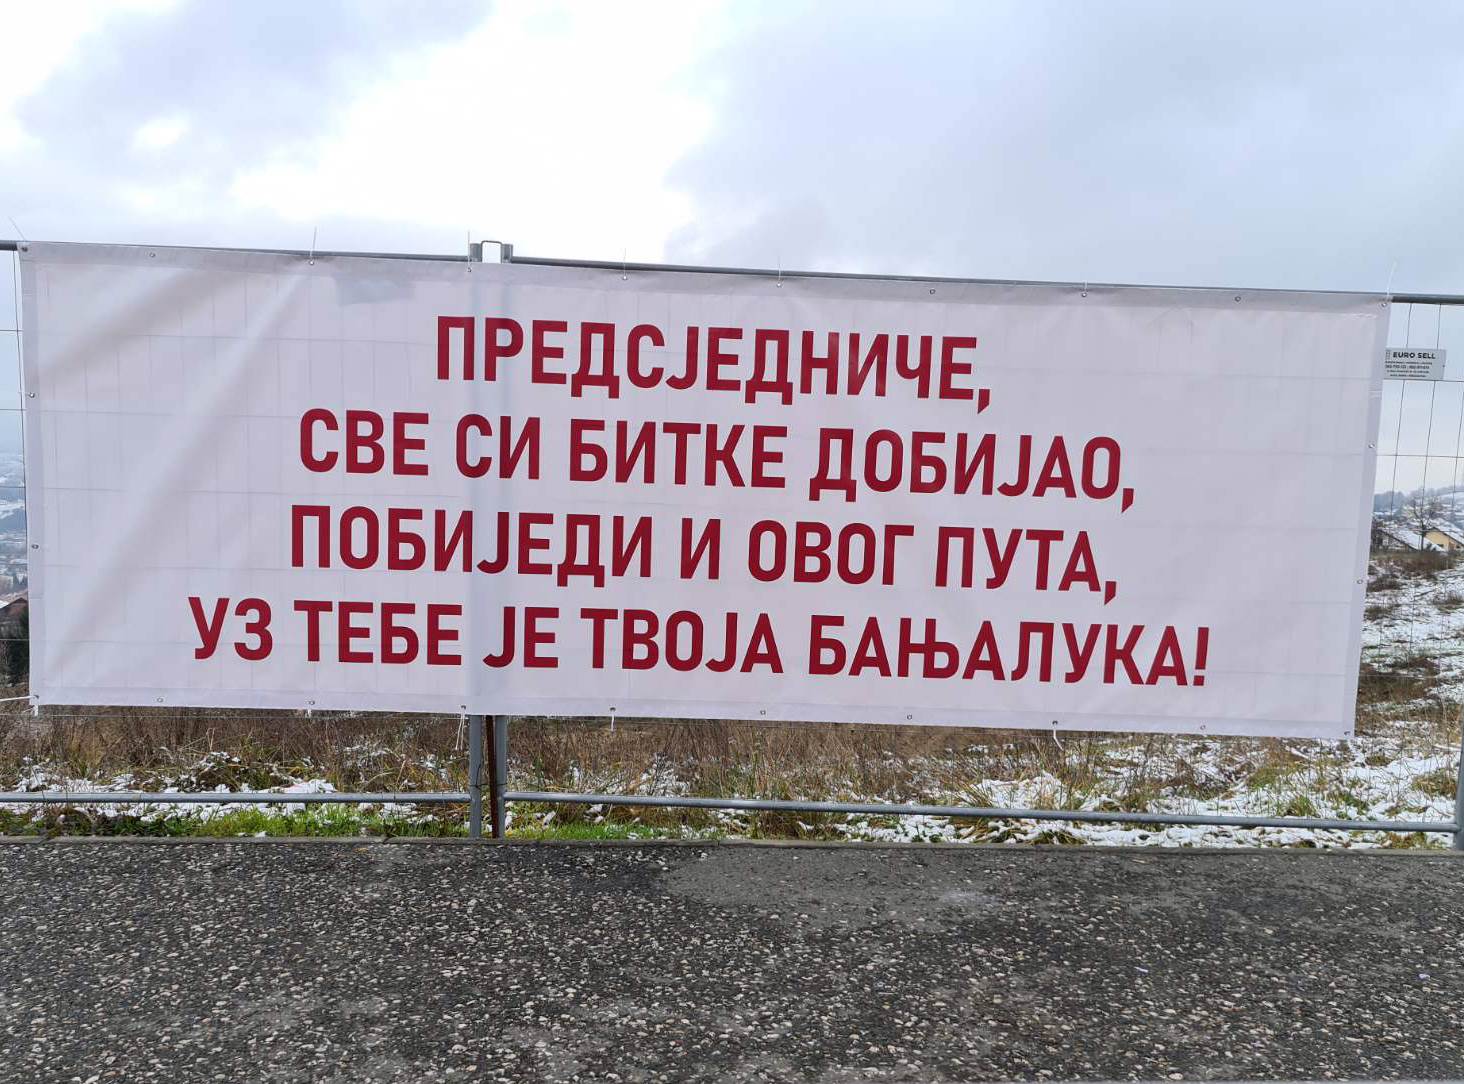  Poruka za Dodika na panou ispred UKC-a RS (FOTO) 